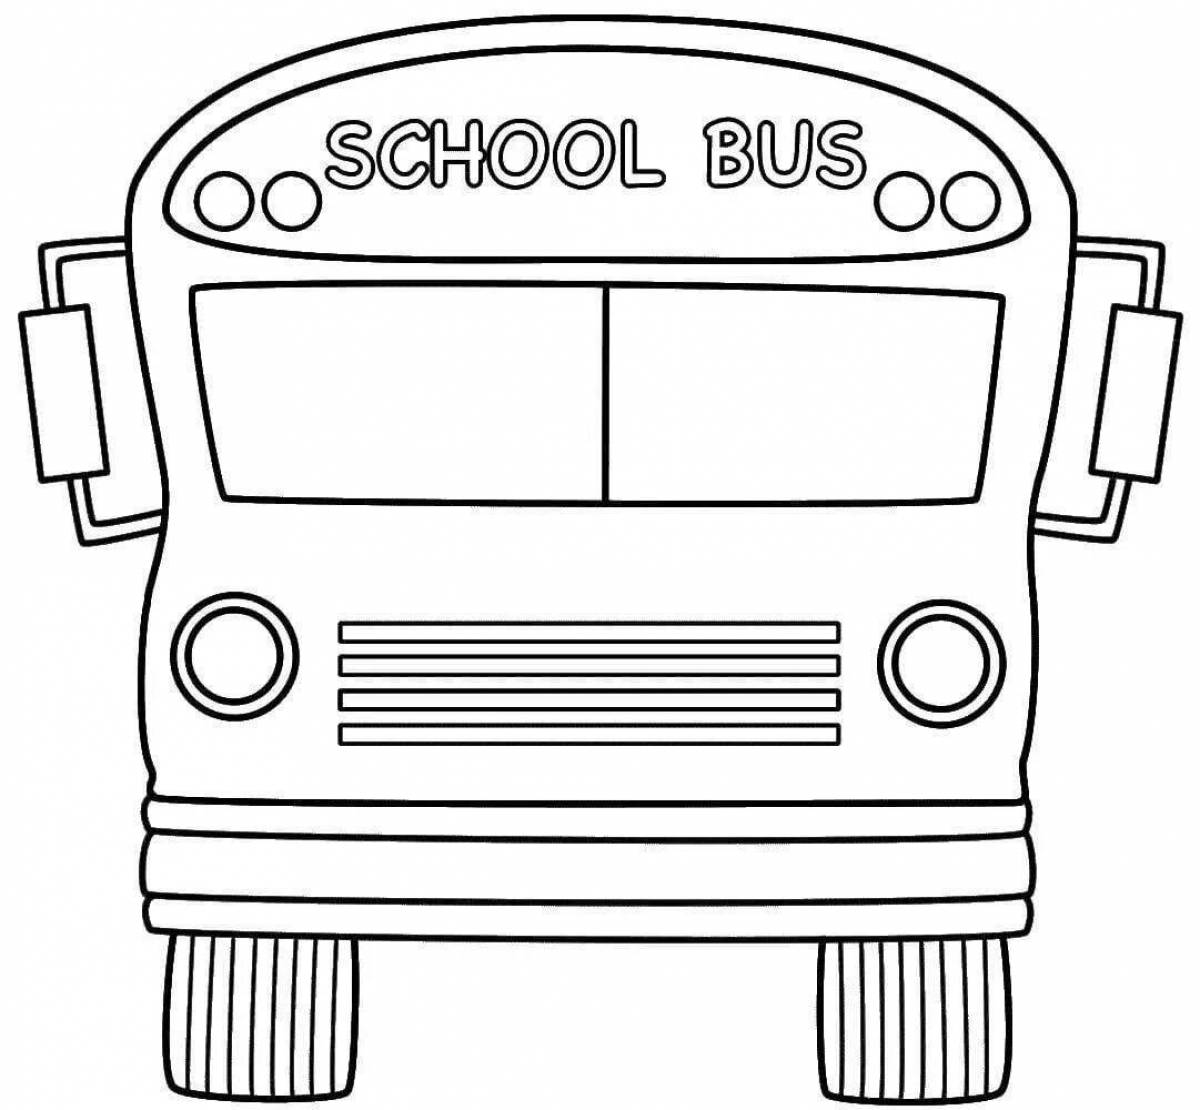 School bus #5